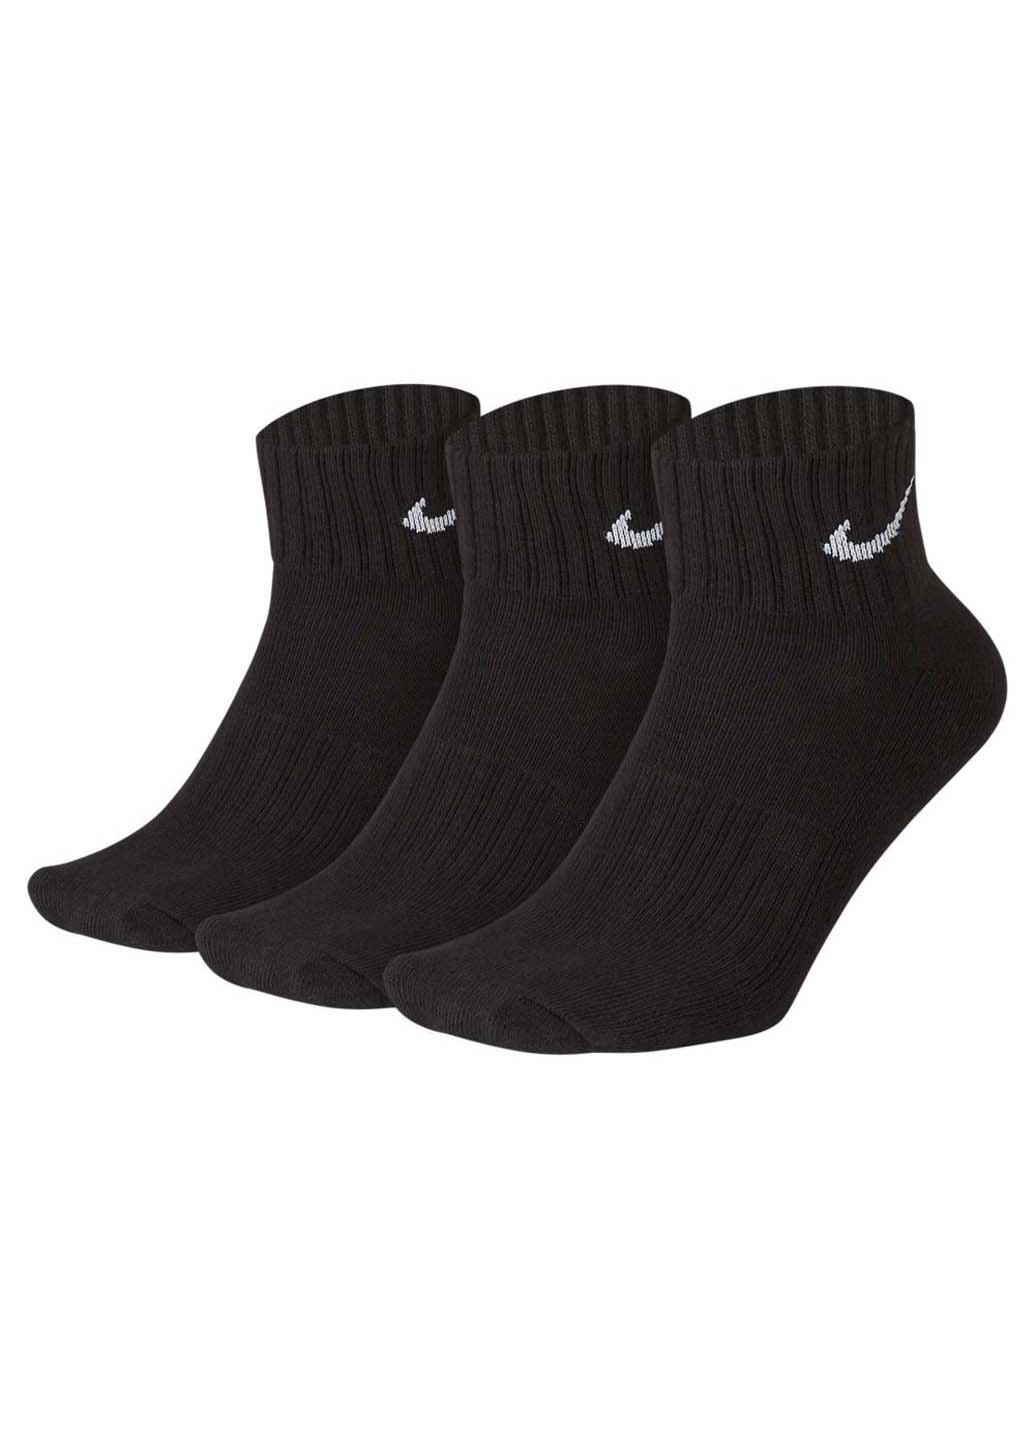 Носки Nike value cush ankle 3-pack (256963251)